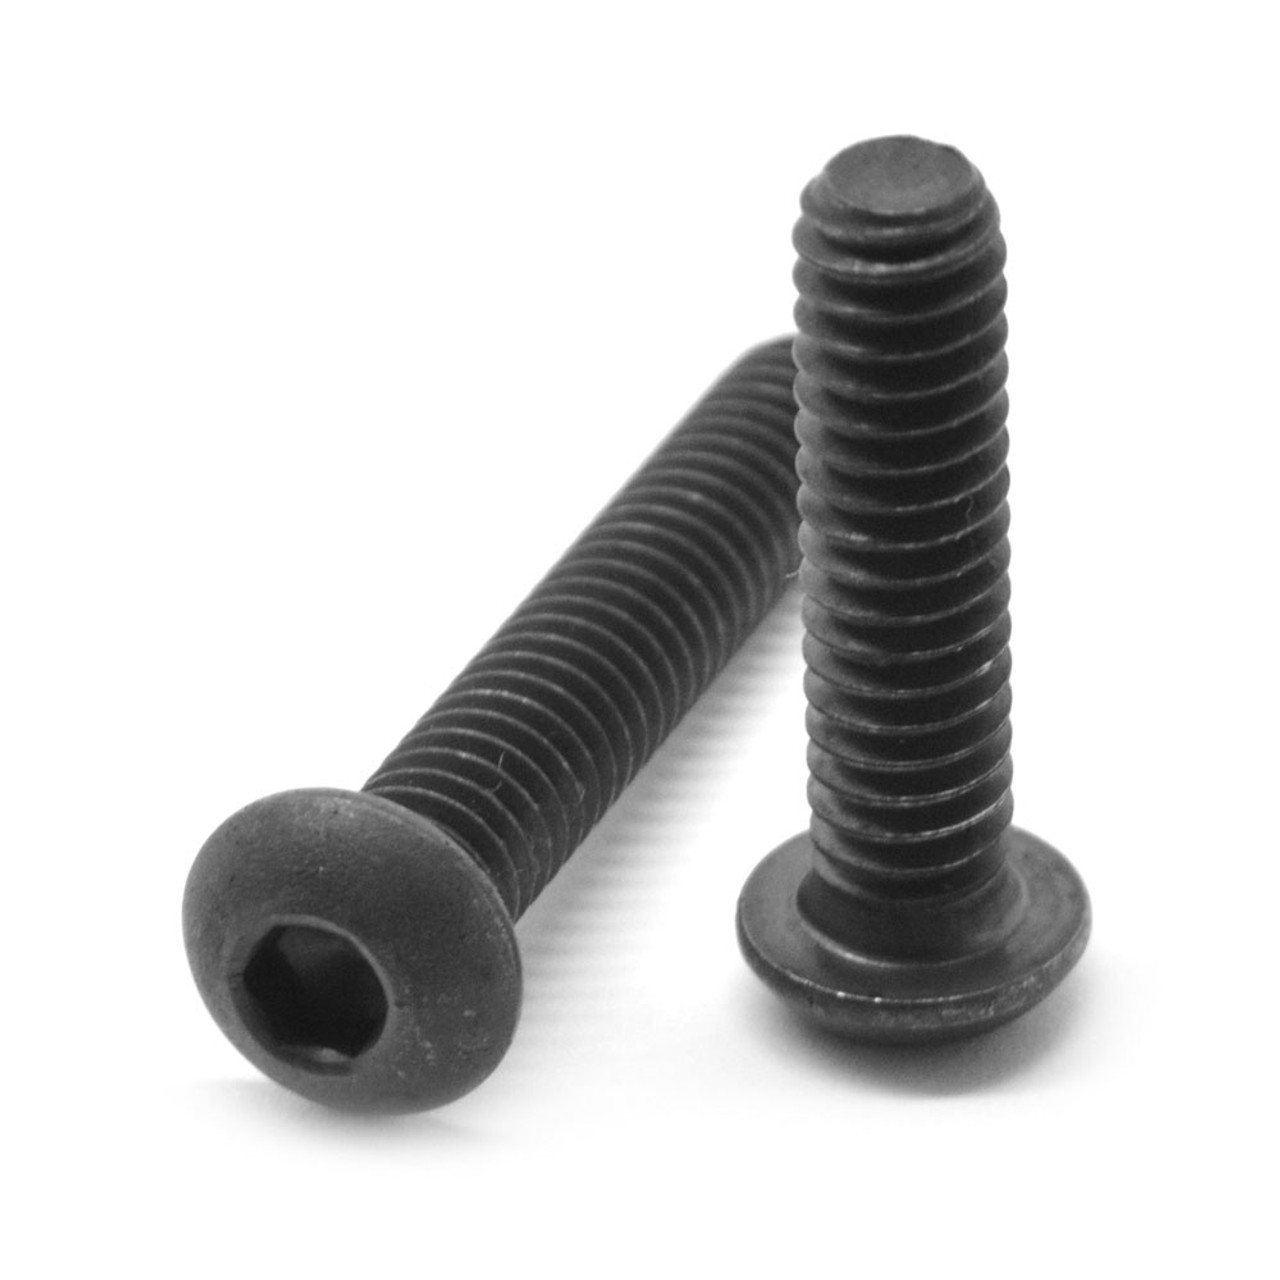 M12 x 1.75 x 45 MM (FT) Coarse Thread ISO 7380 Class 12.9 Socket Button Head Cap Screw Alloy Steel Black Oxide